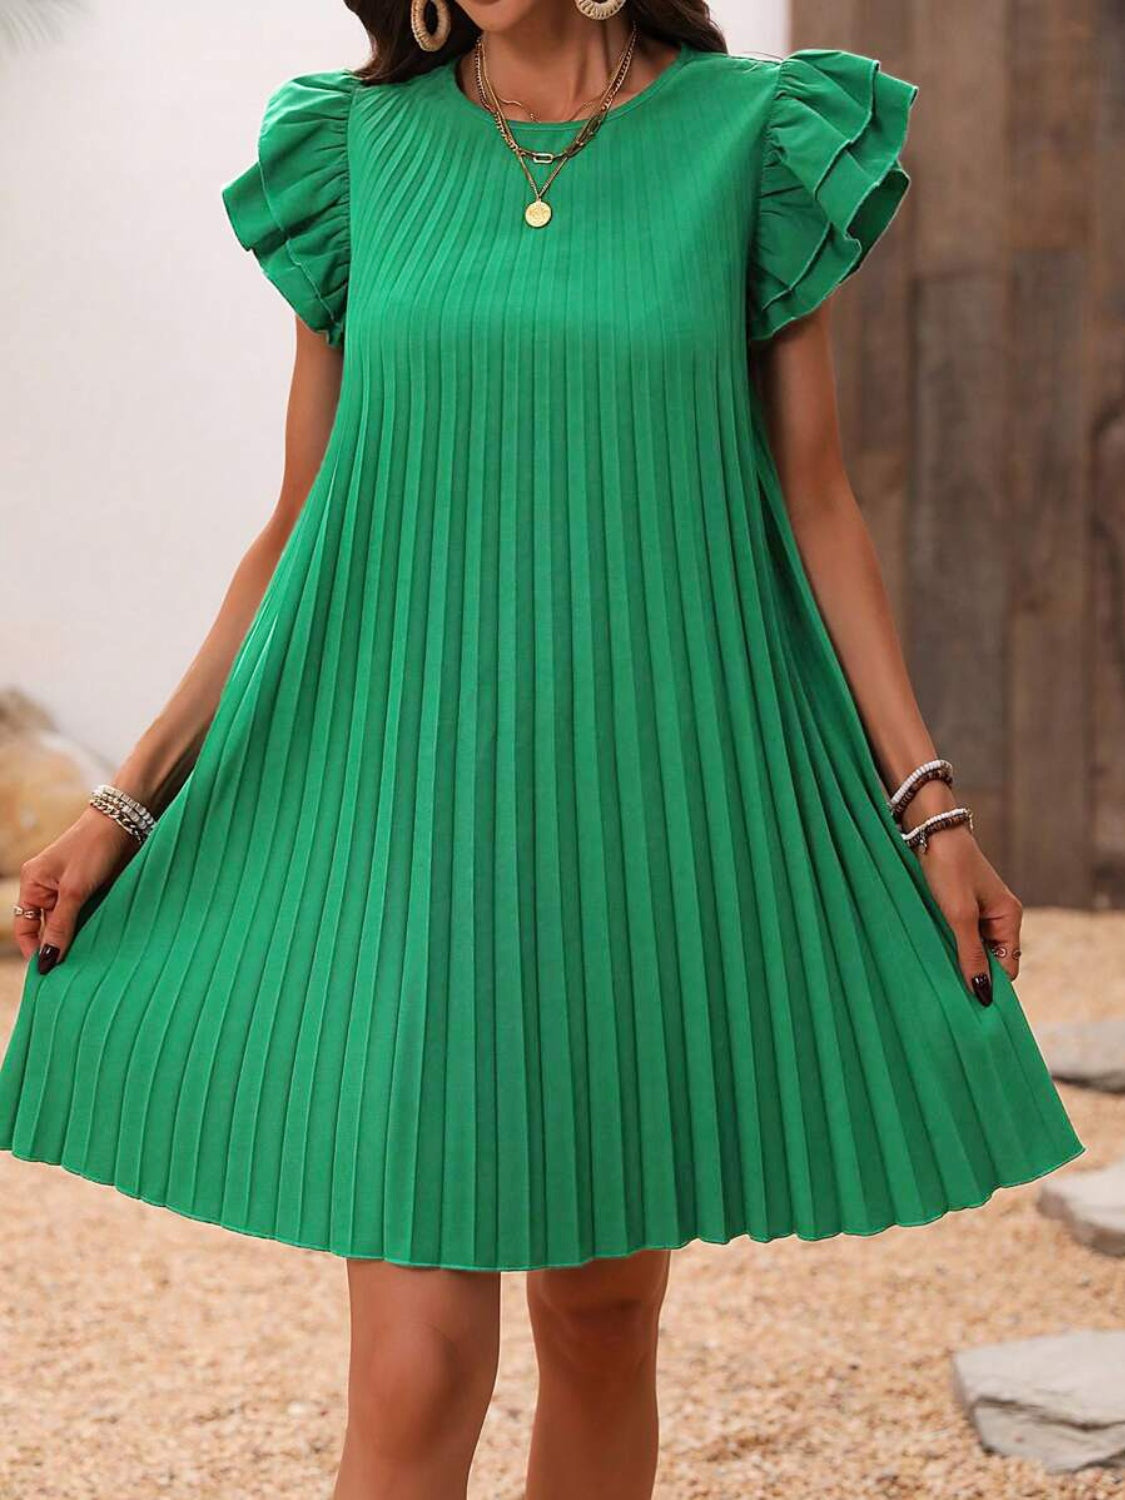 TEEK - Dark Green Pleated Round Neck Cap Sleeve Dress DRESS TEEK Trend   